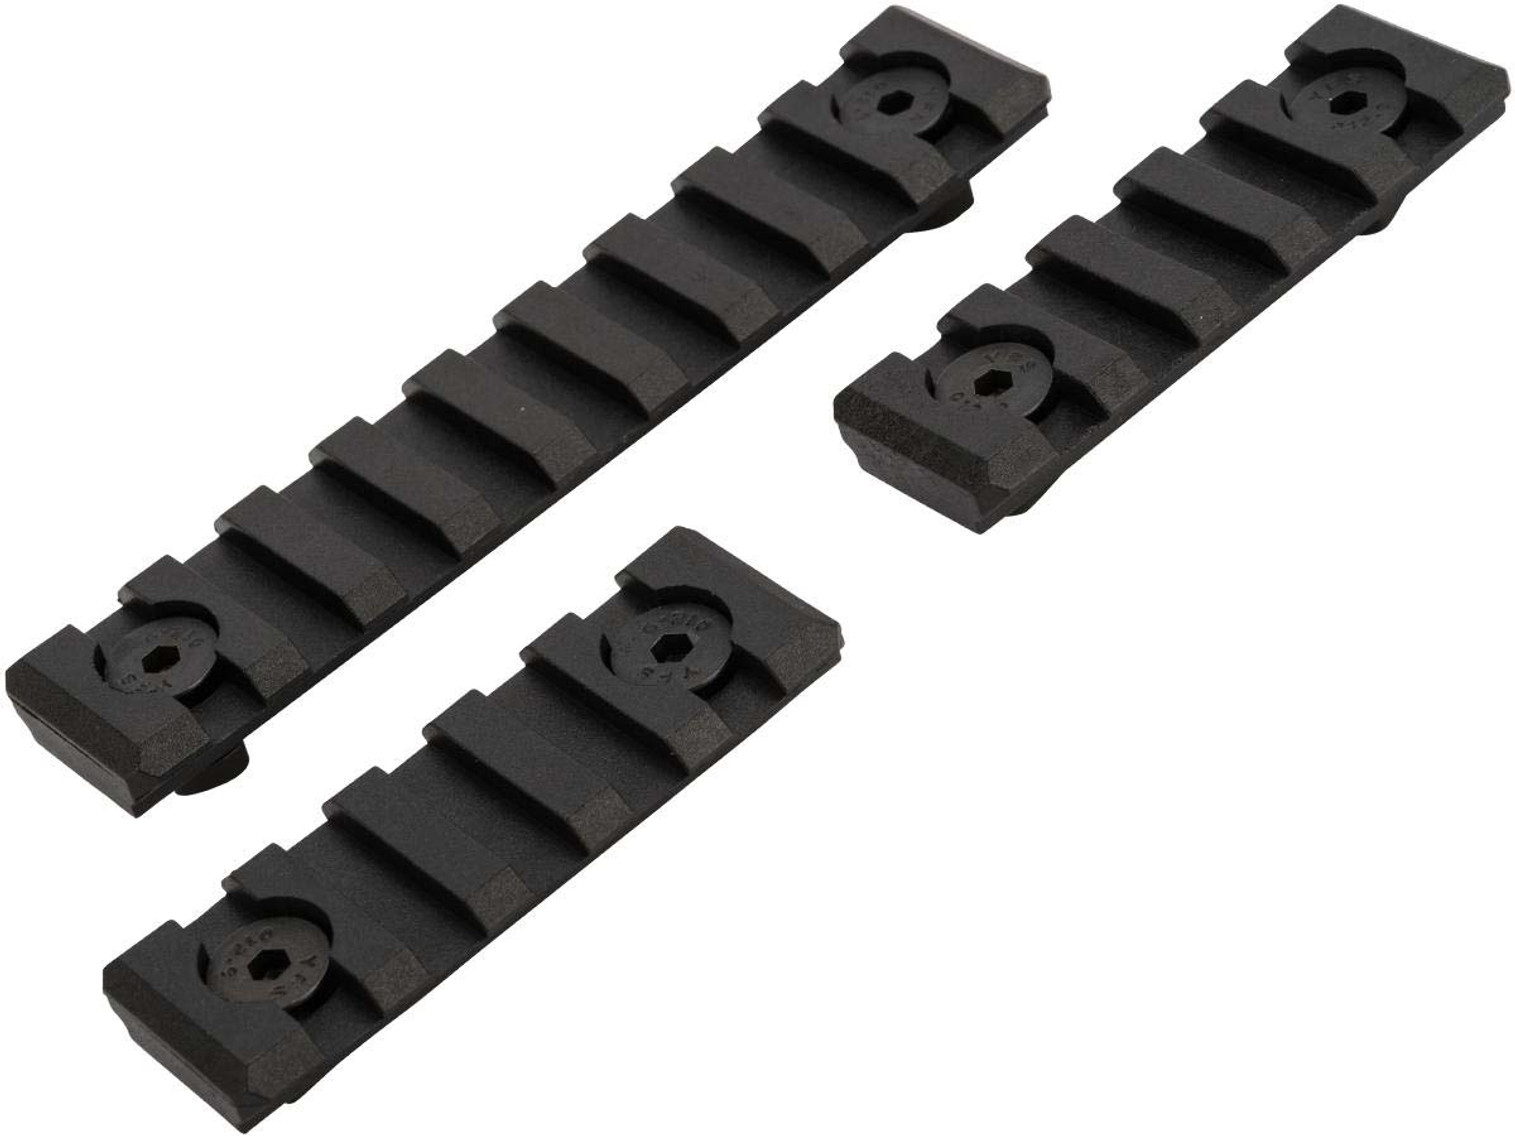 King Arms M-LOK Polymer Rail Set (Color: Black)